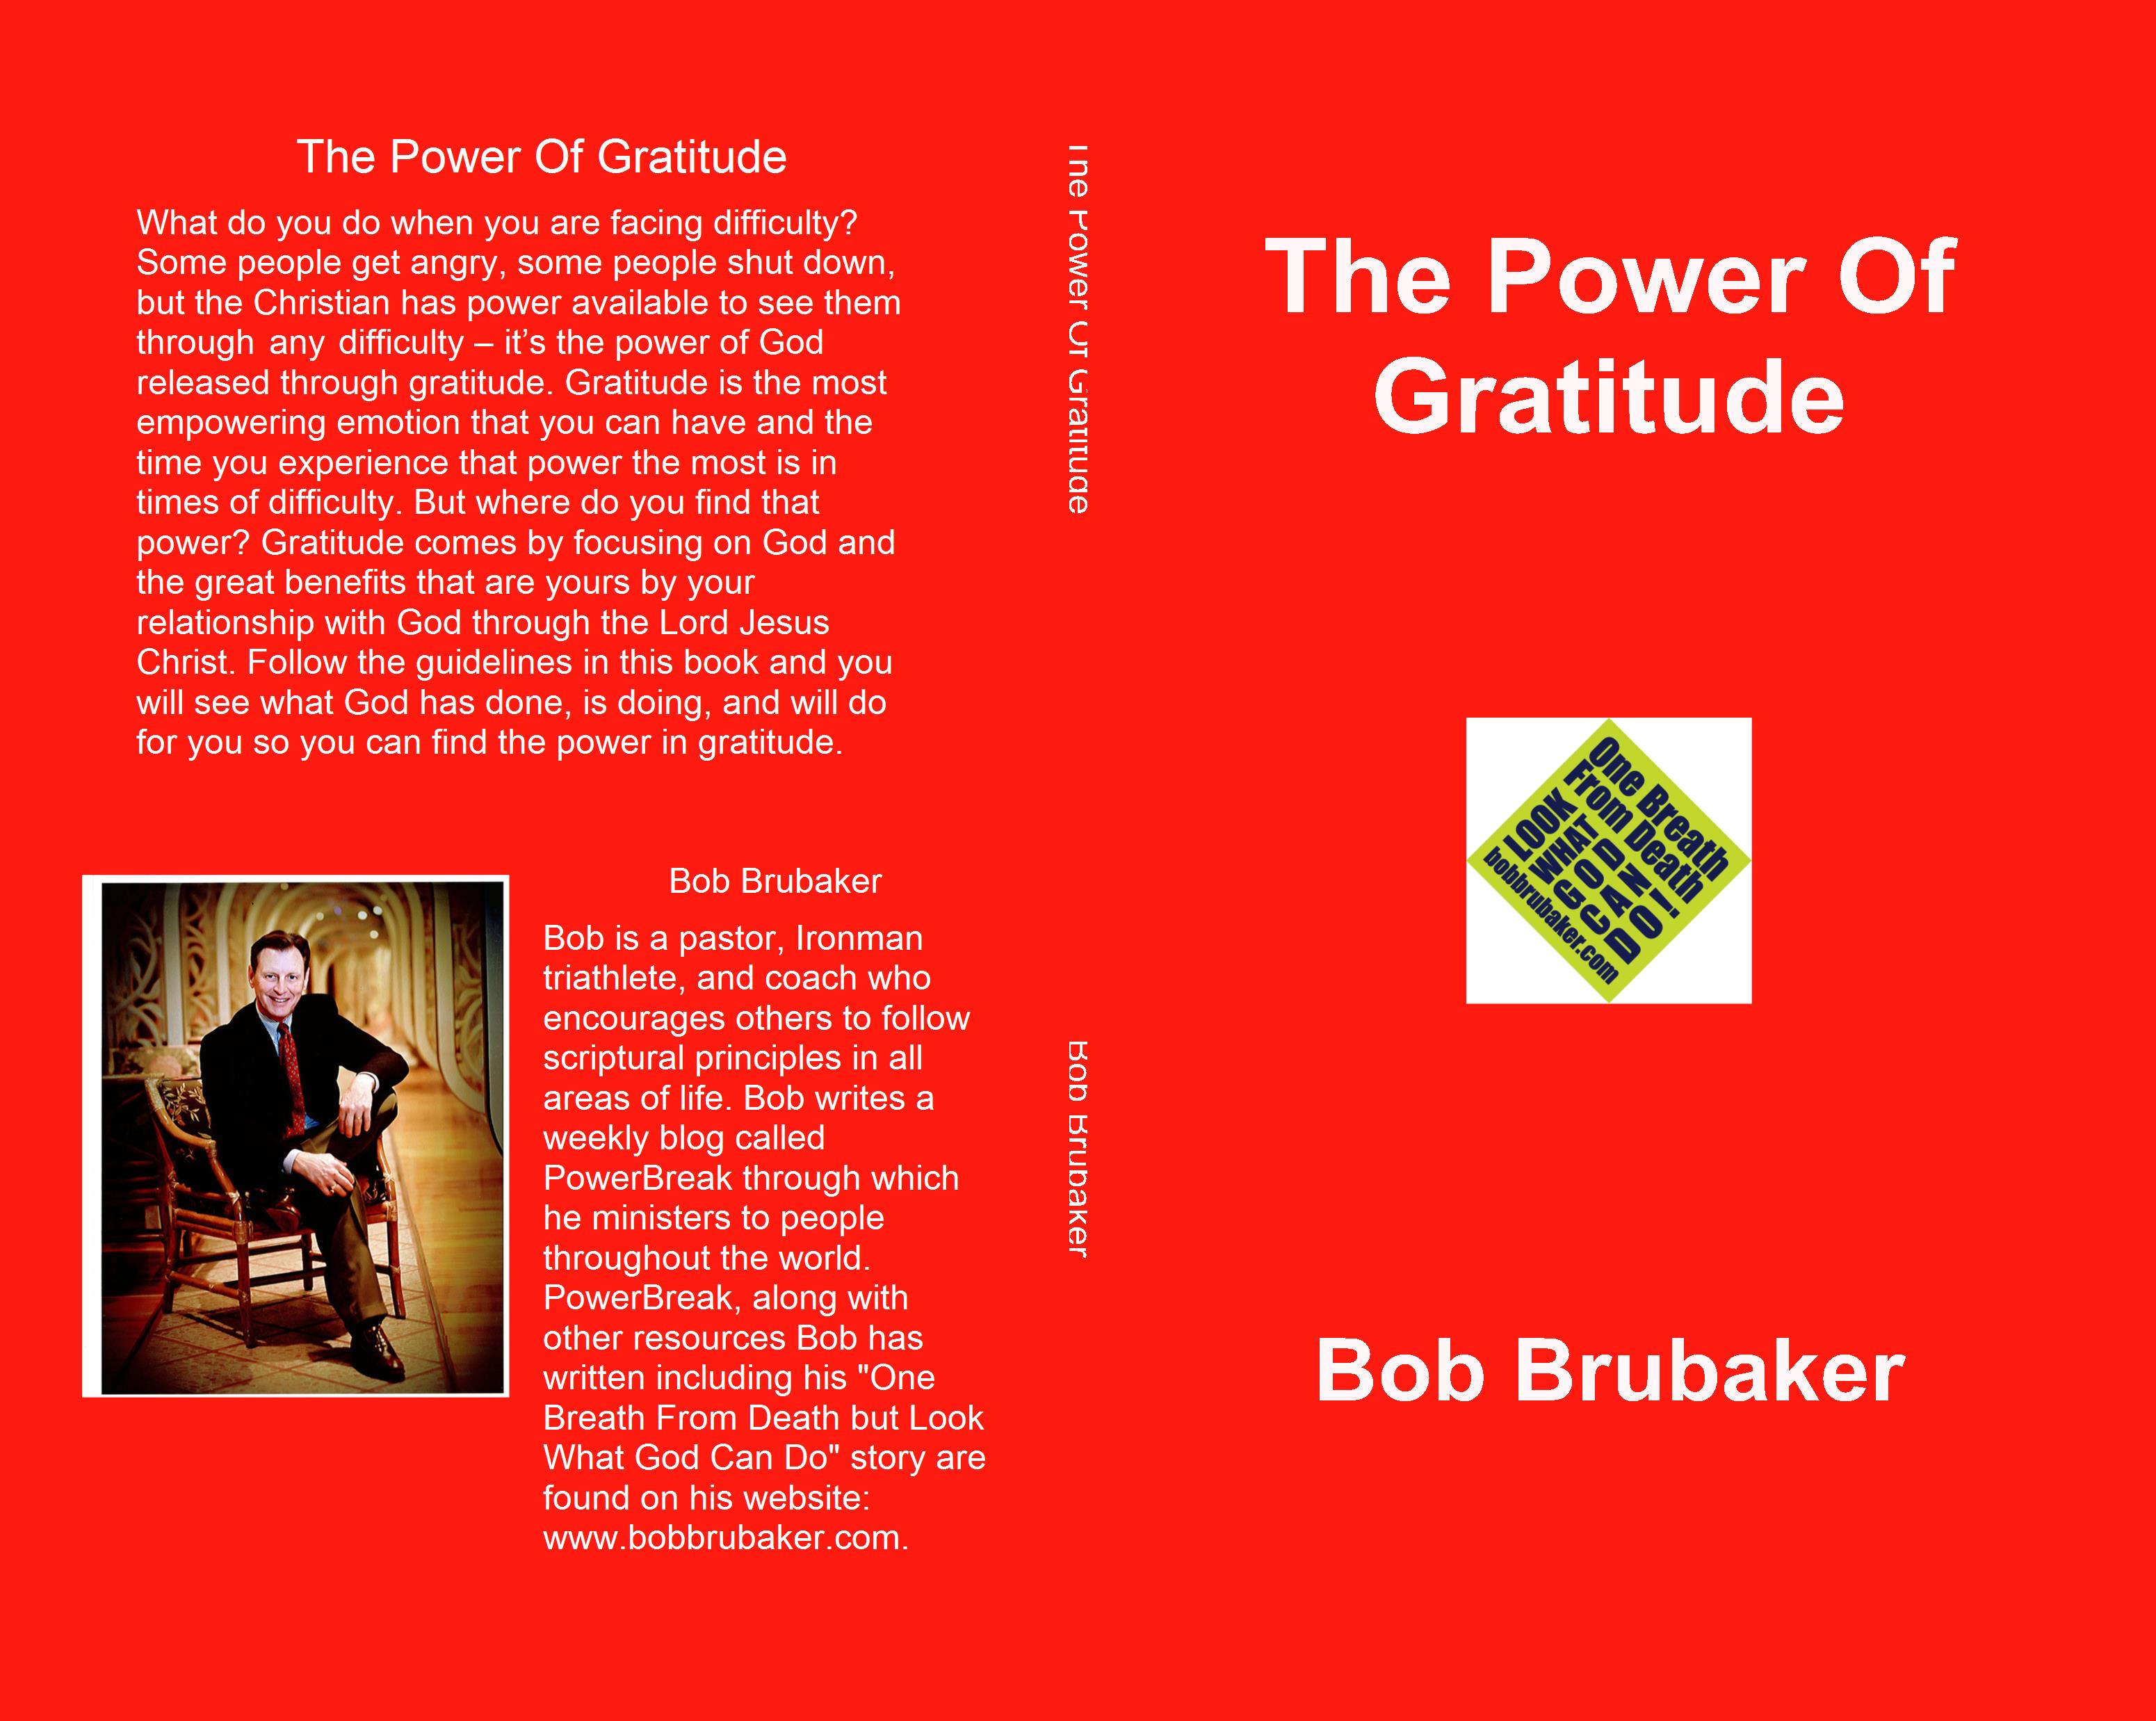 The power of graditude